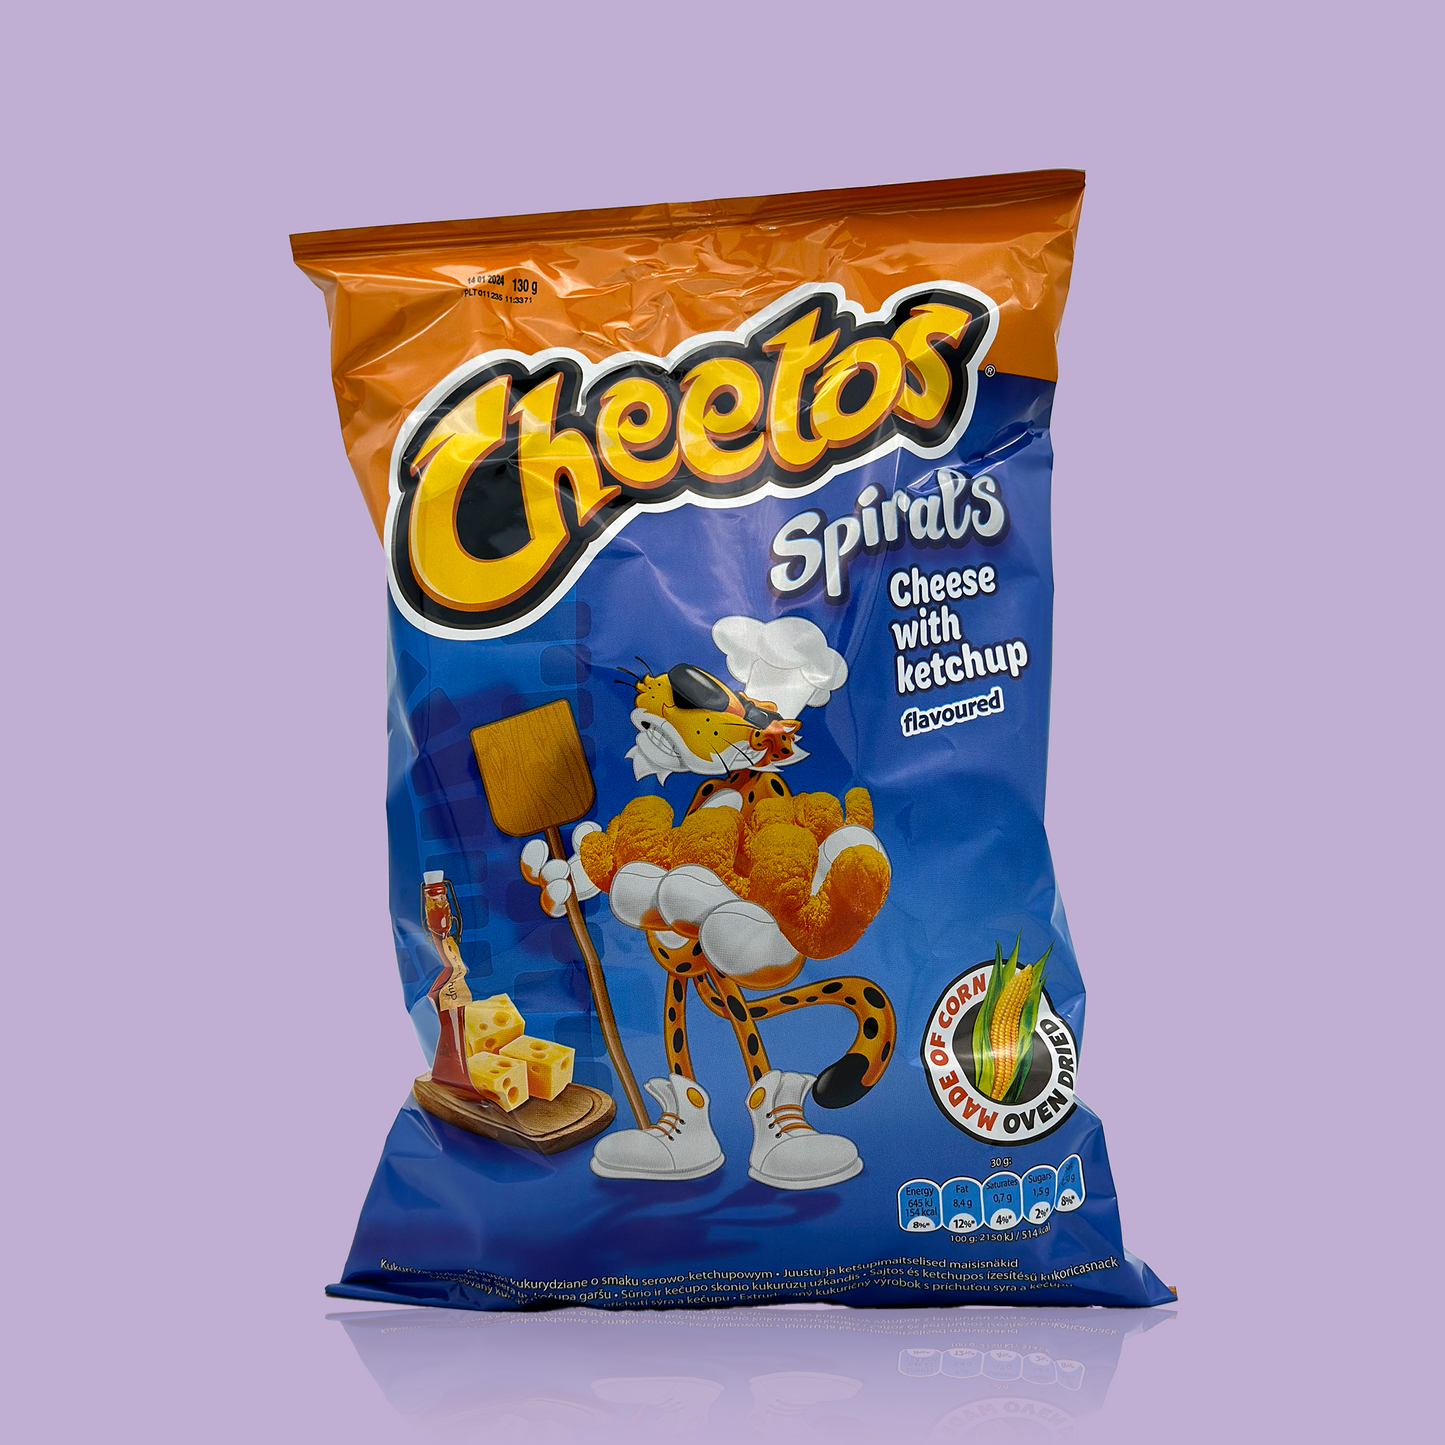 Cheetos Spirals Cheese & Ketchup